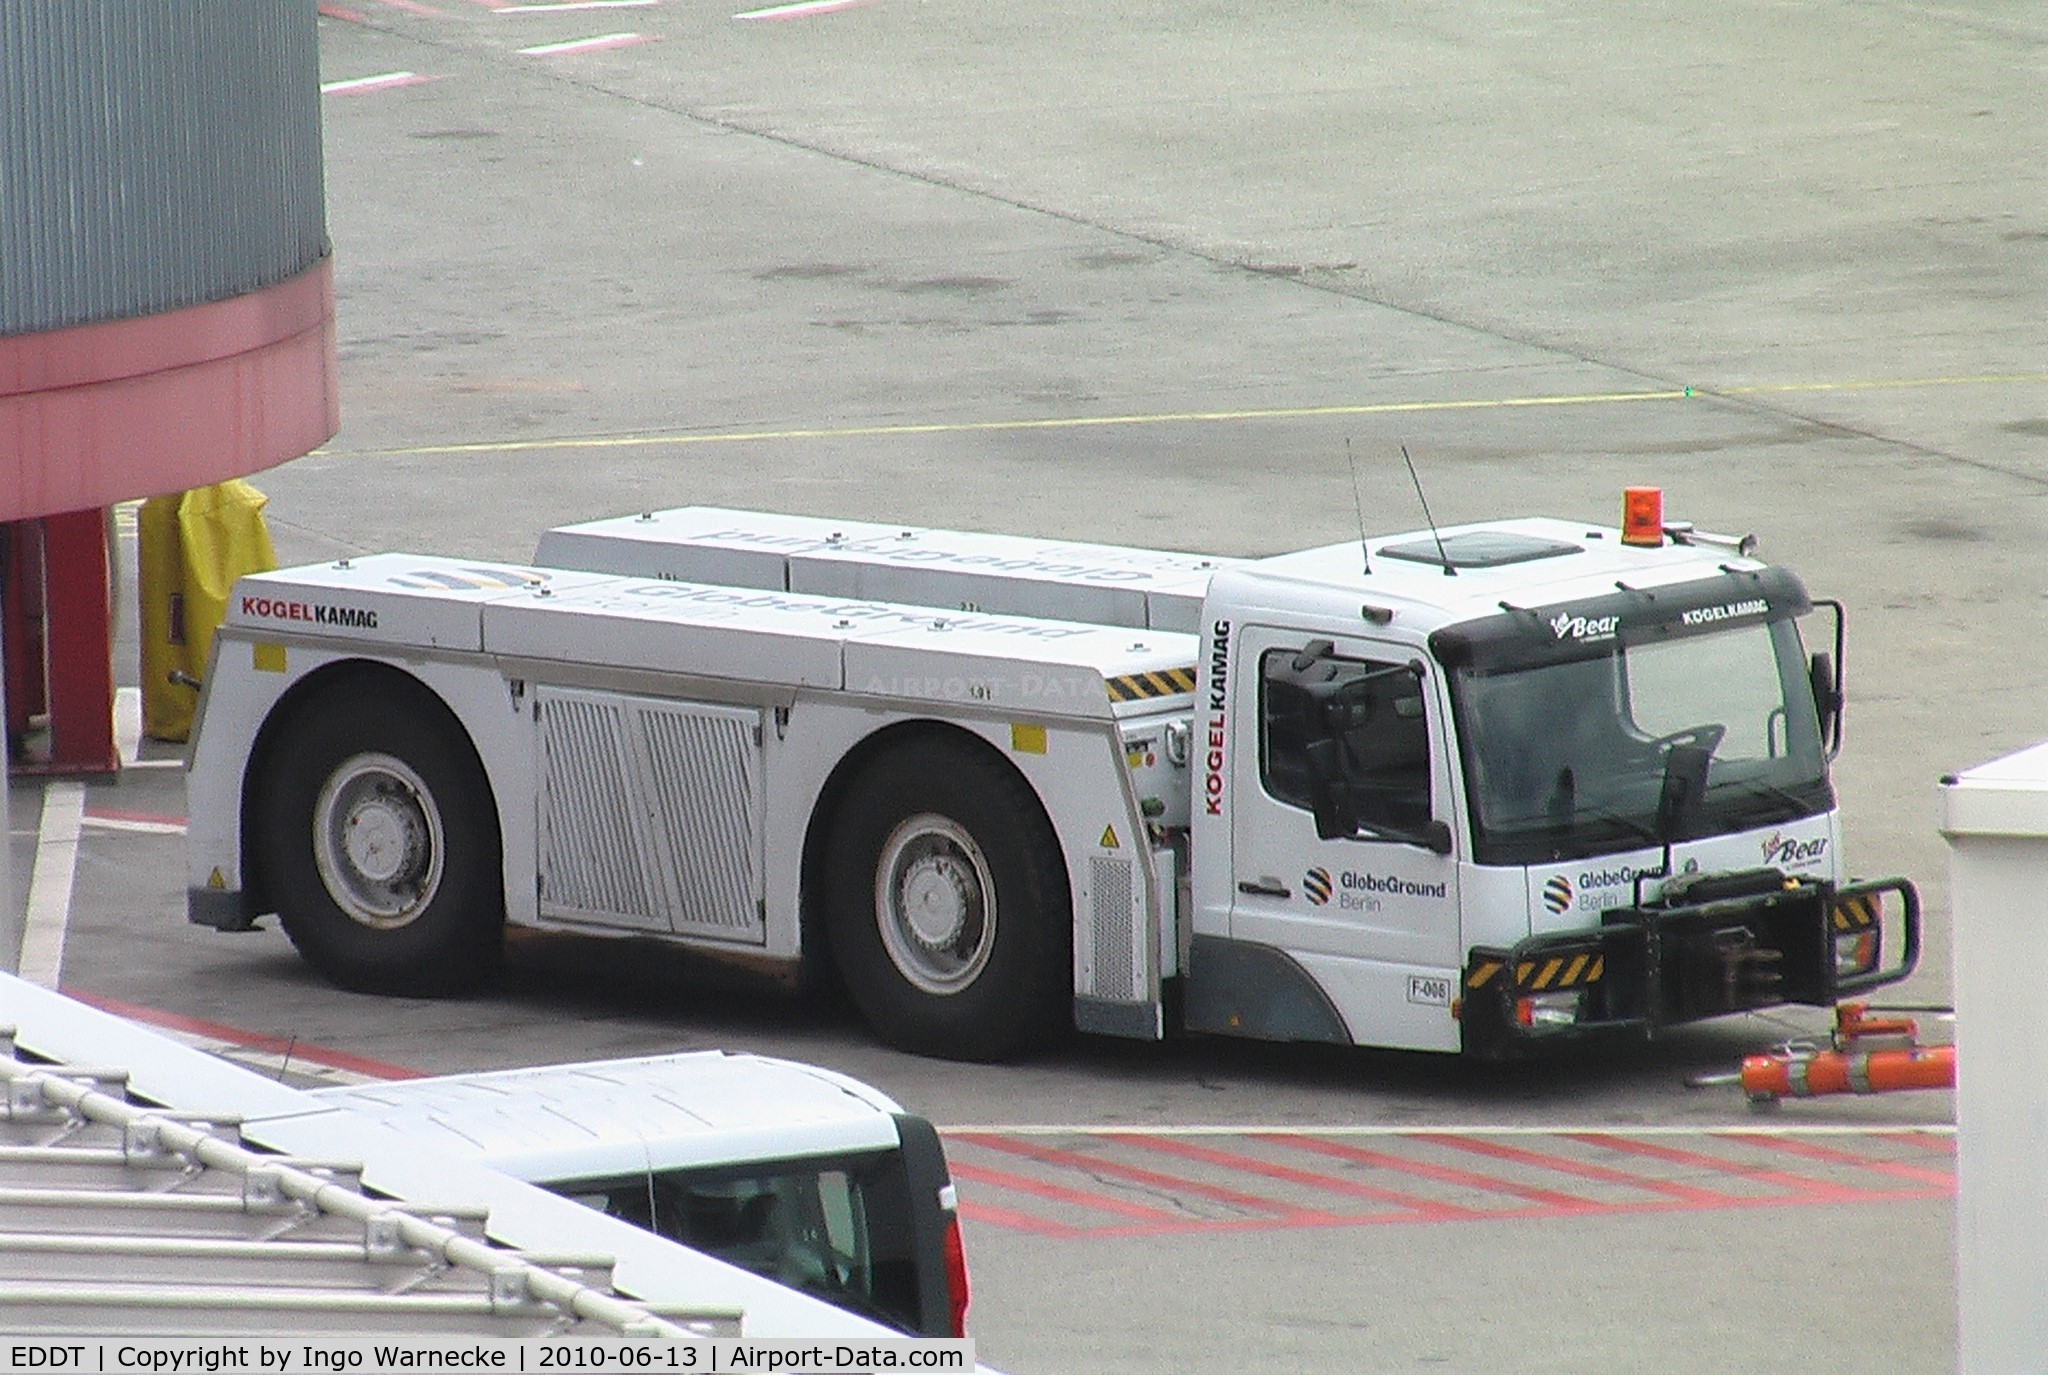 Tegel International Airport (closing in 2011), Berlin Germany (EDDT) - pushback tug at Tegel airport